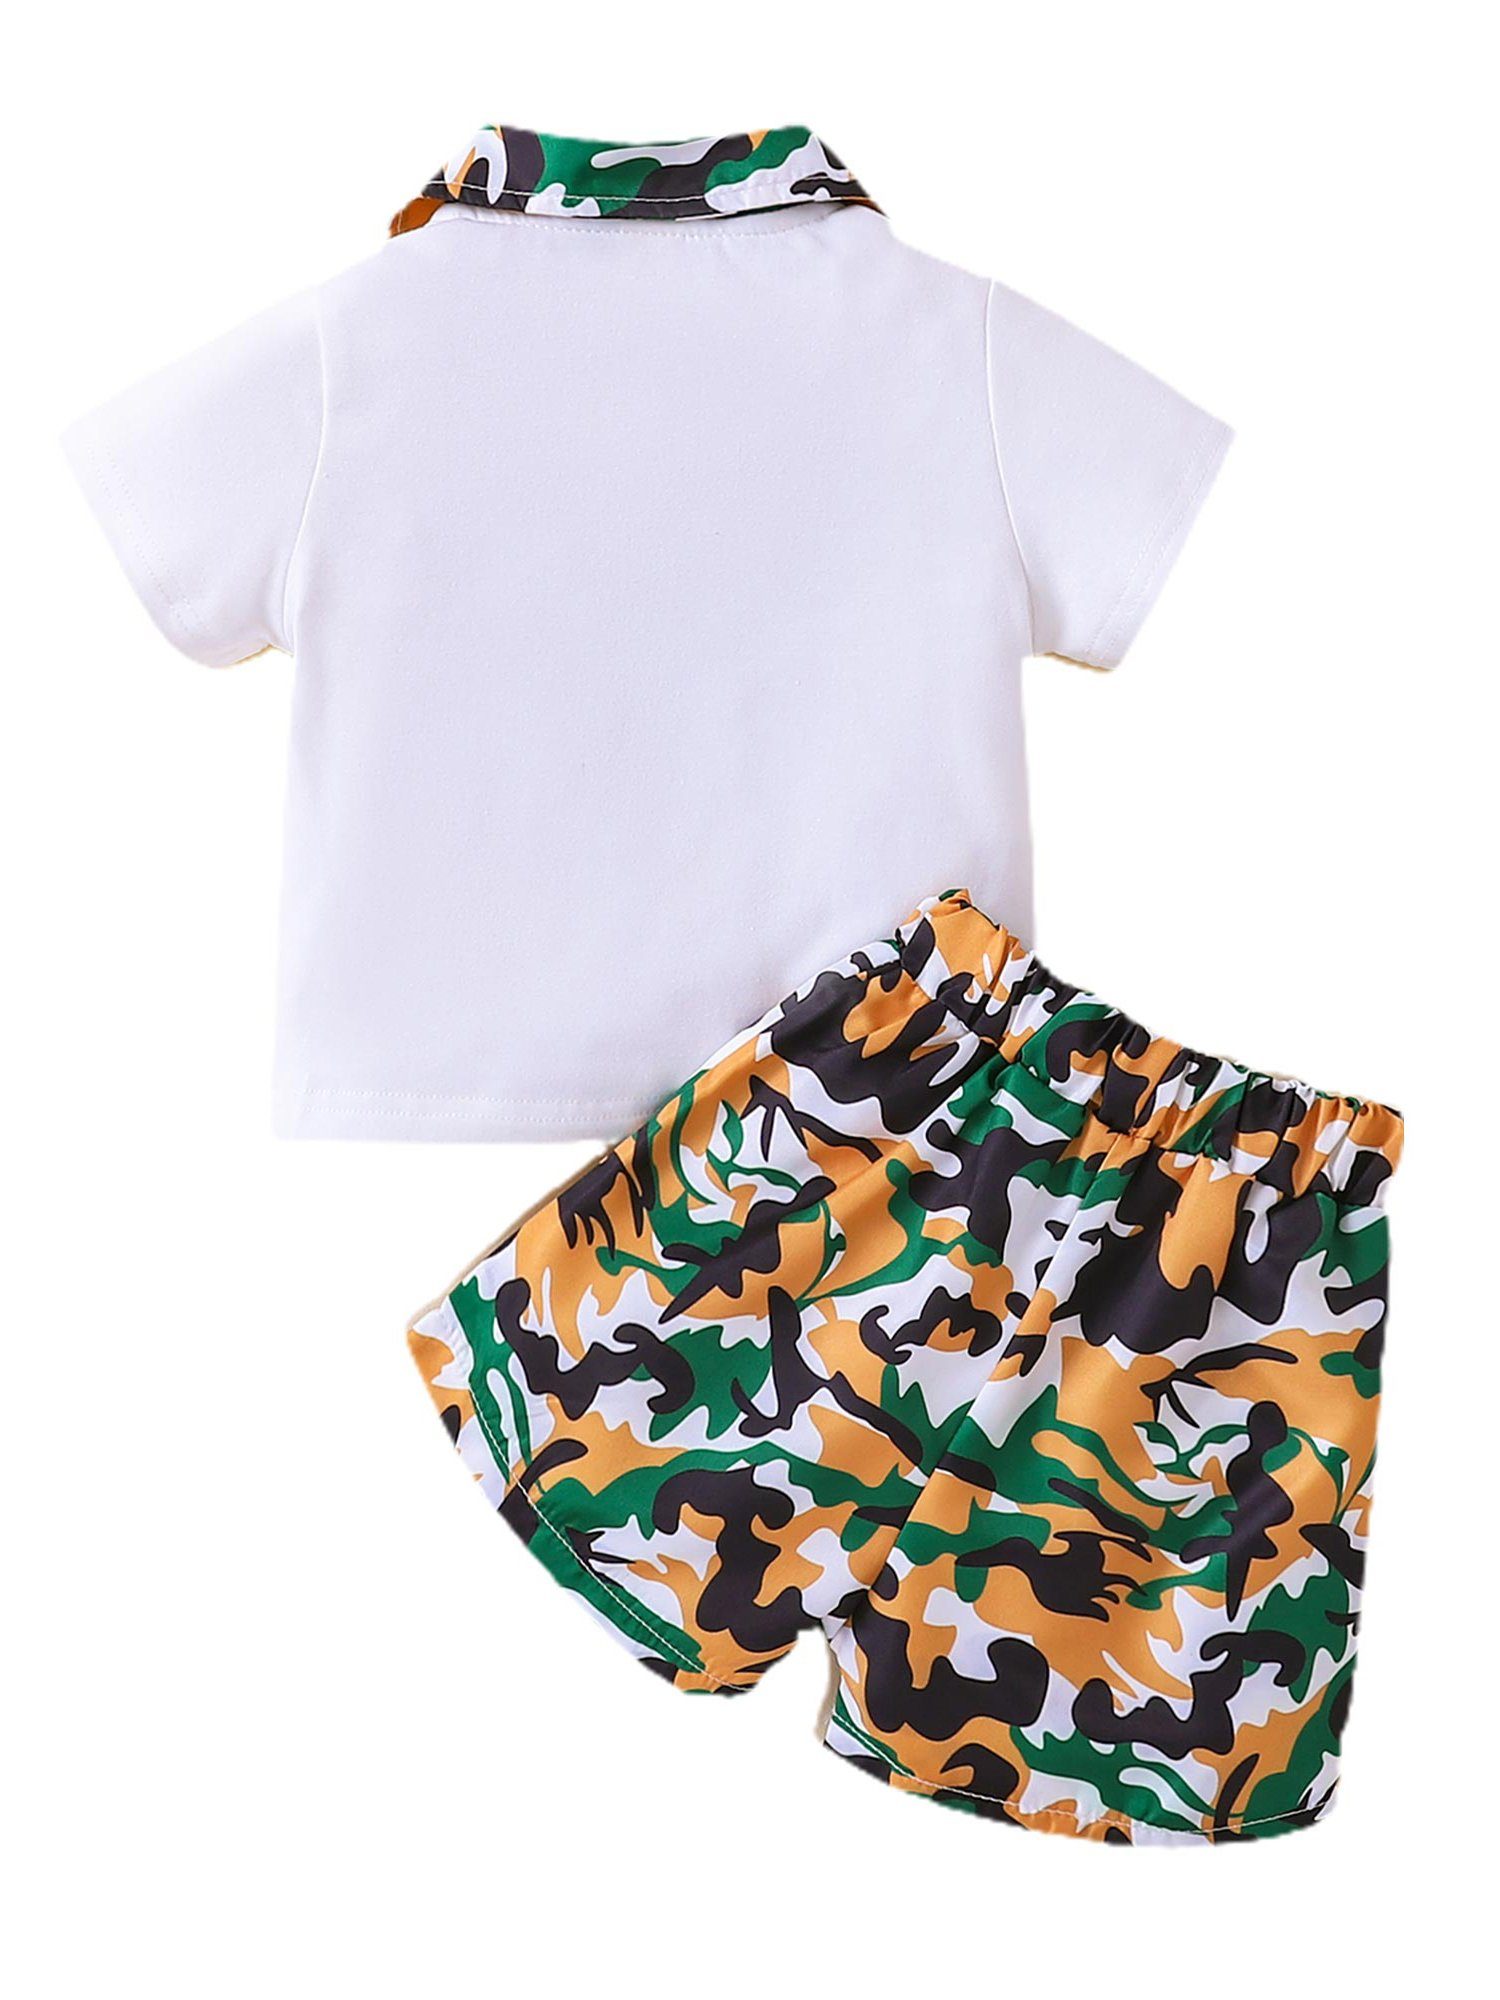 Kinder Jungen (Gr. 50 - 92) Lapastyle Shirt & Shorts Sommer Tarnung Set für Jungen, Top & Shorts